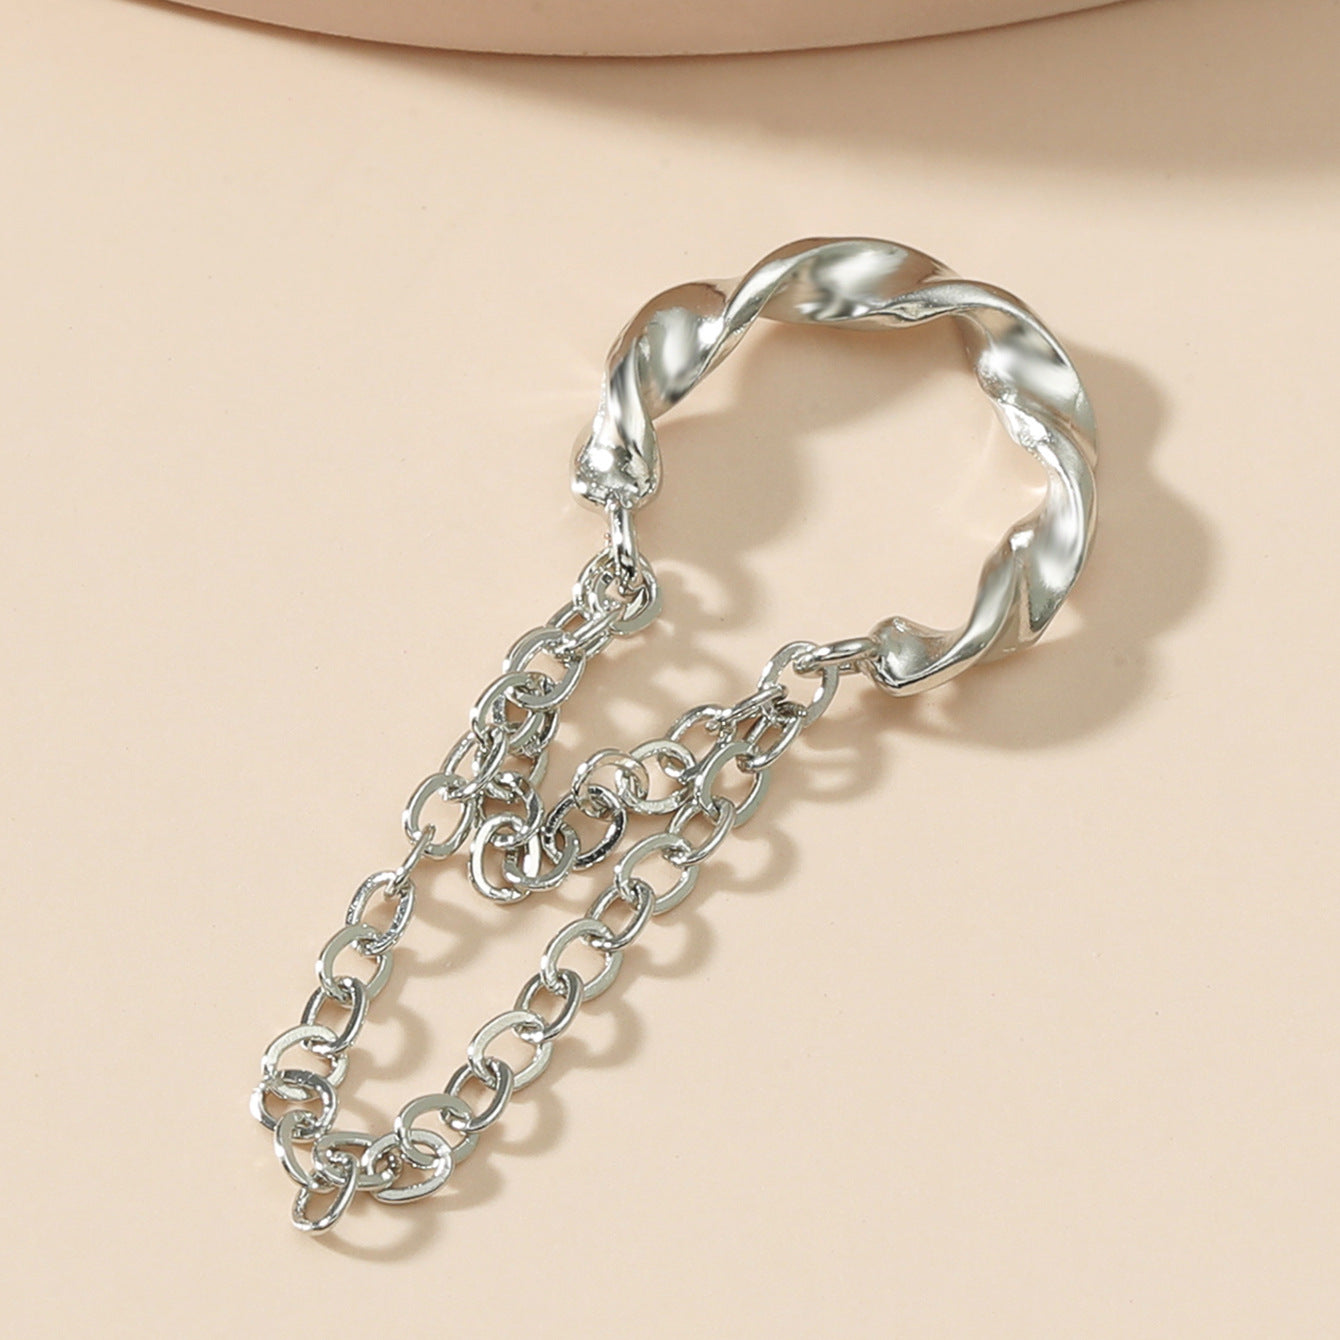 Round Tassel Chain Clip Earrings for Women